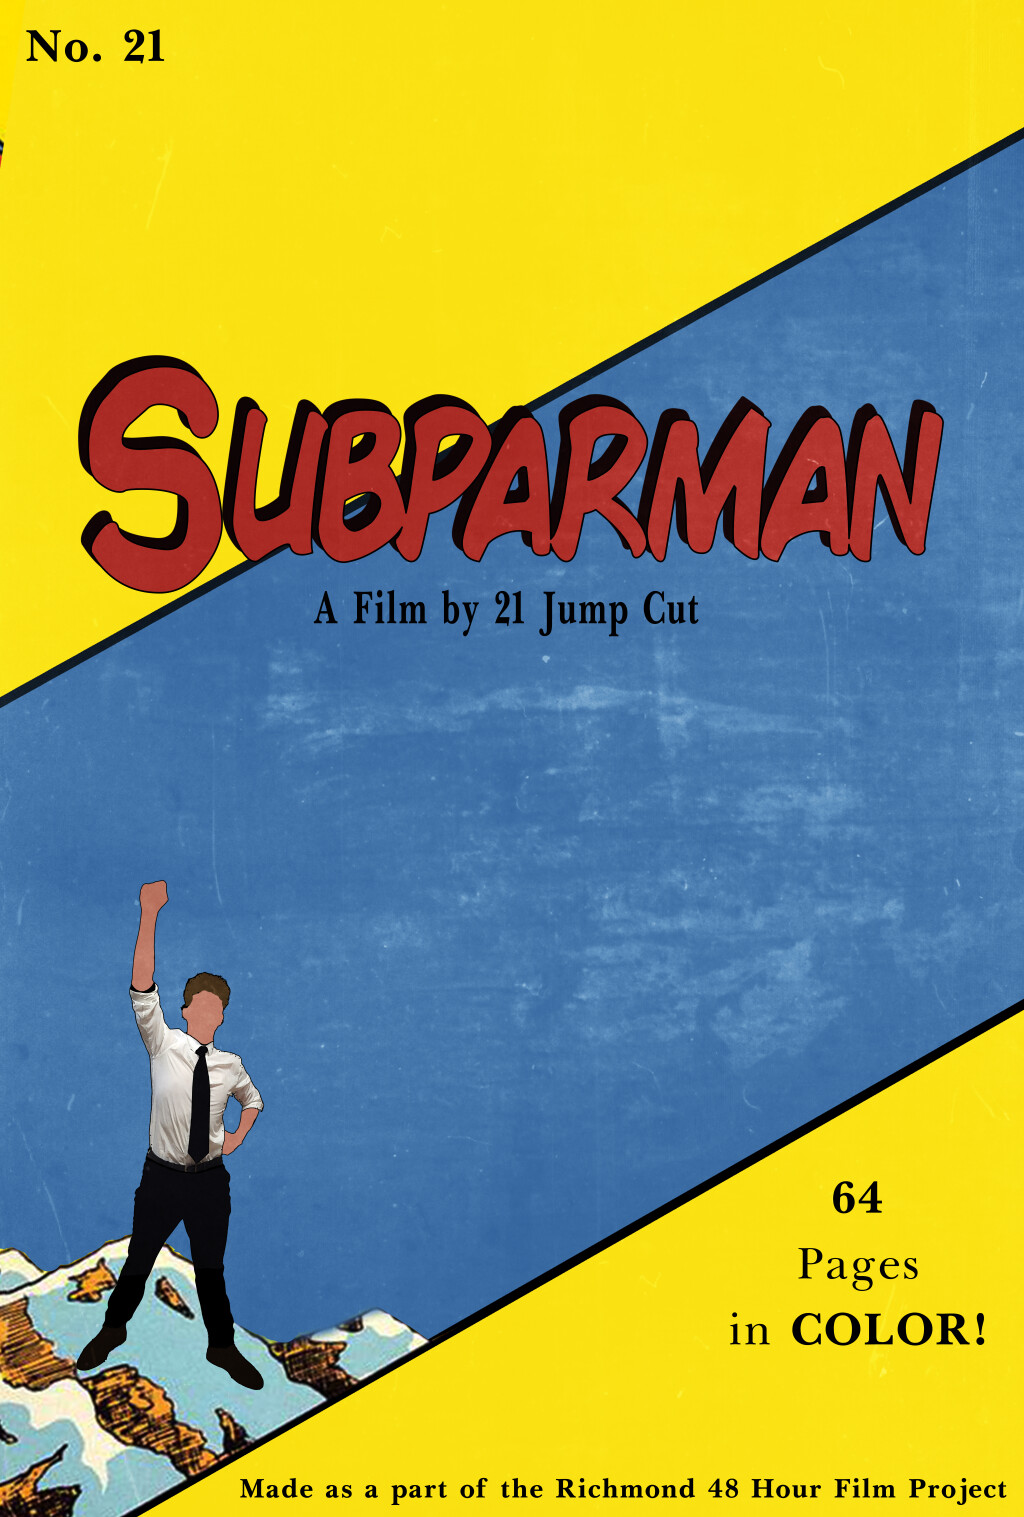 Filmposter for Subparman